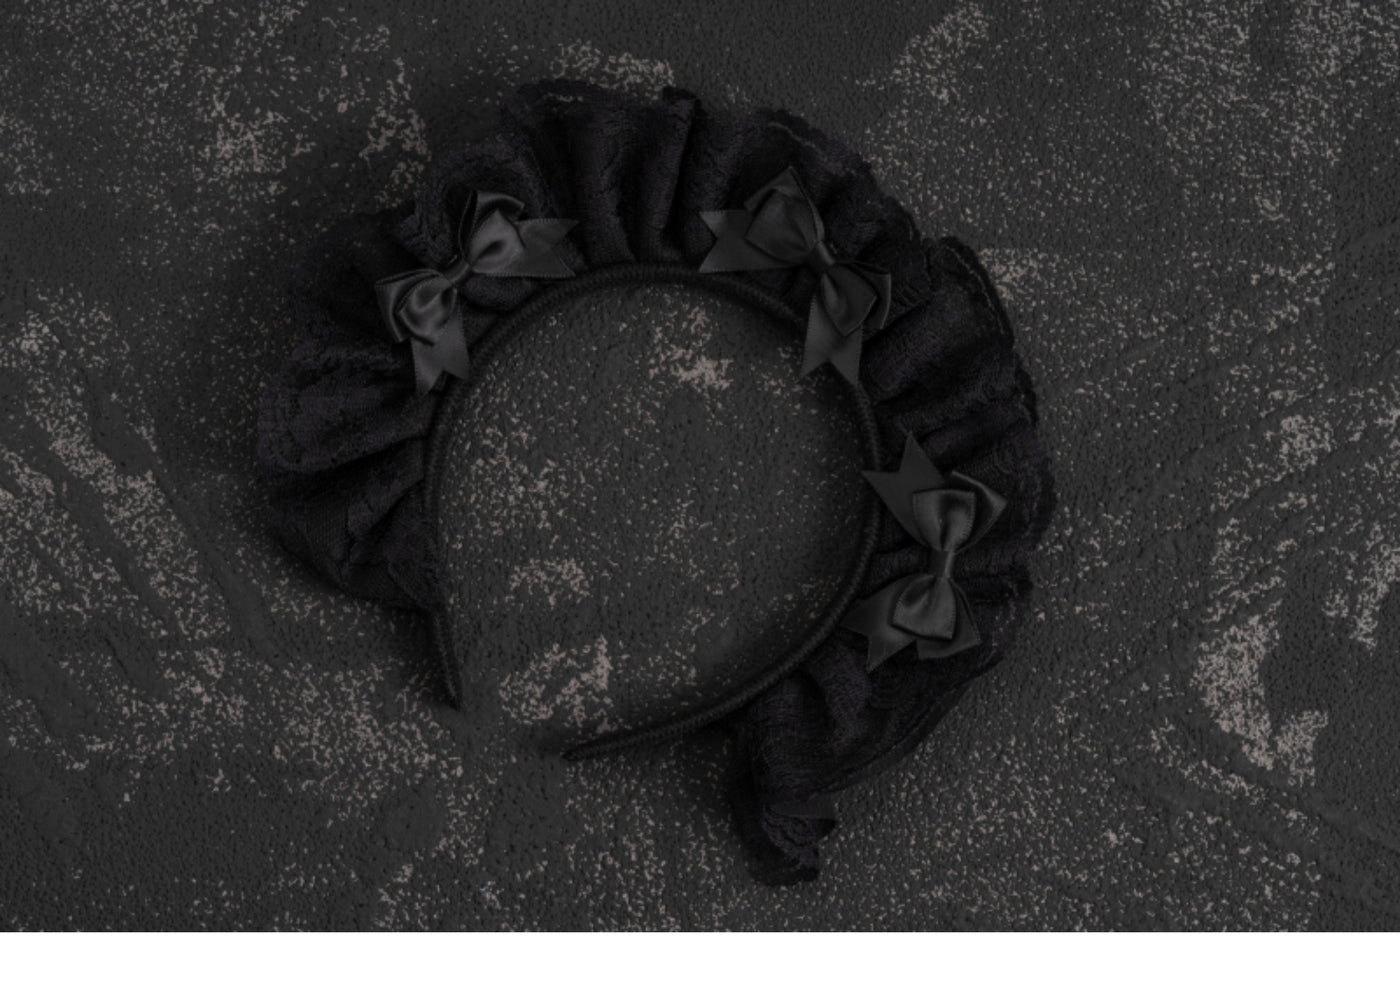 Strange Sugar~Gothic Lolita Lace Black Headband   